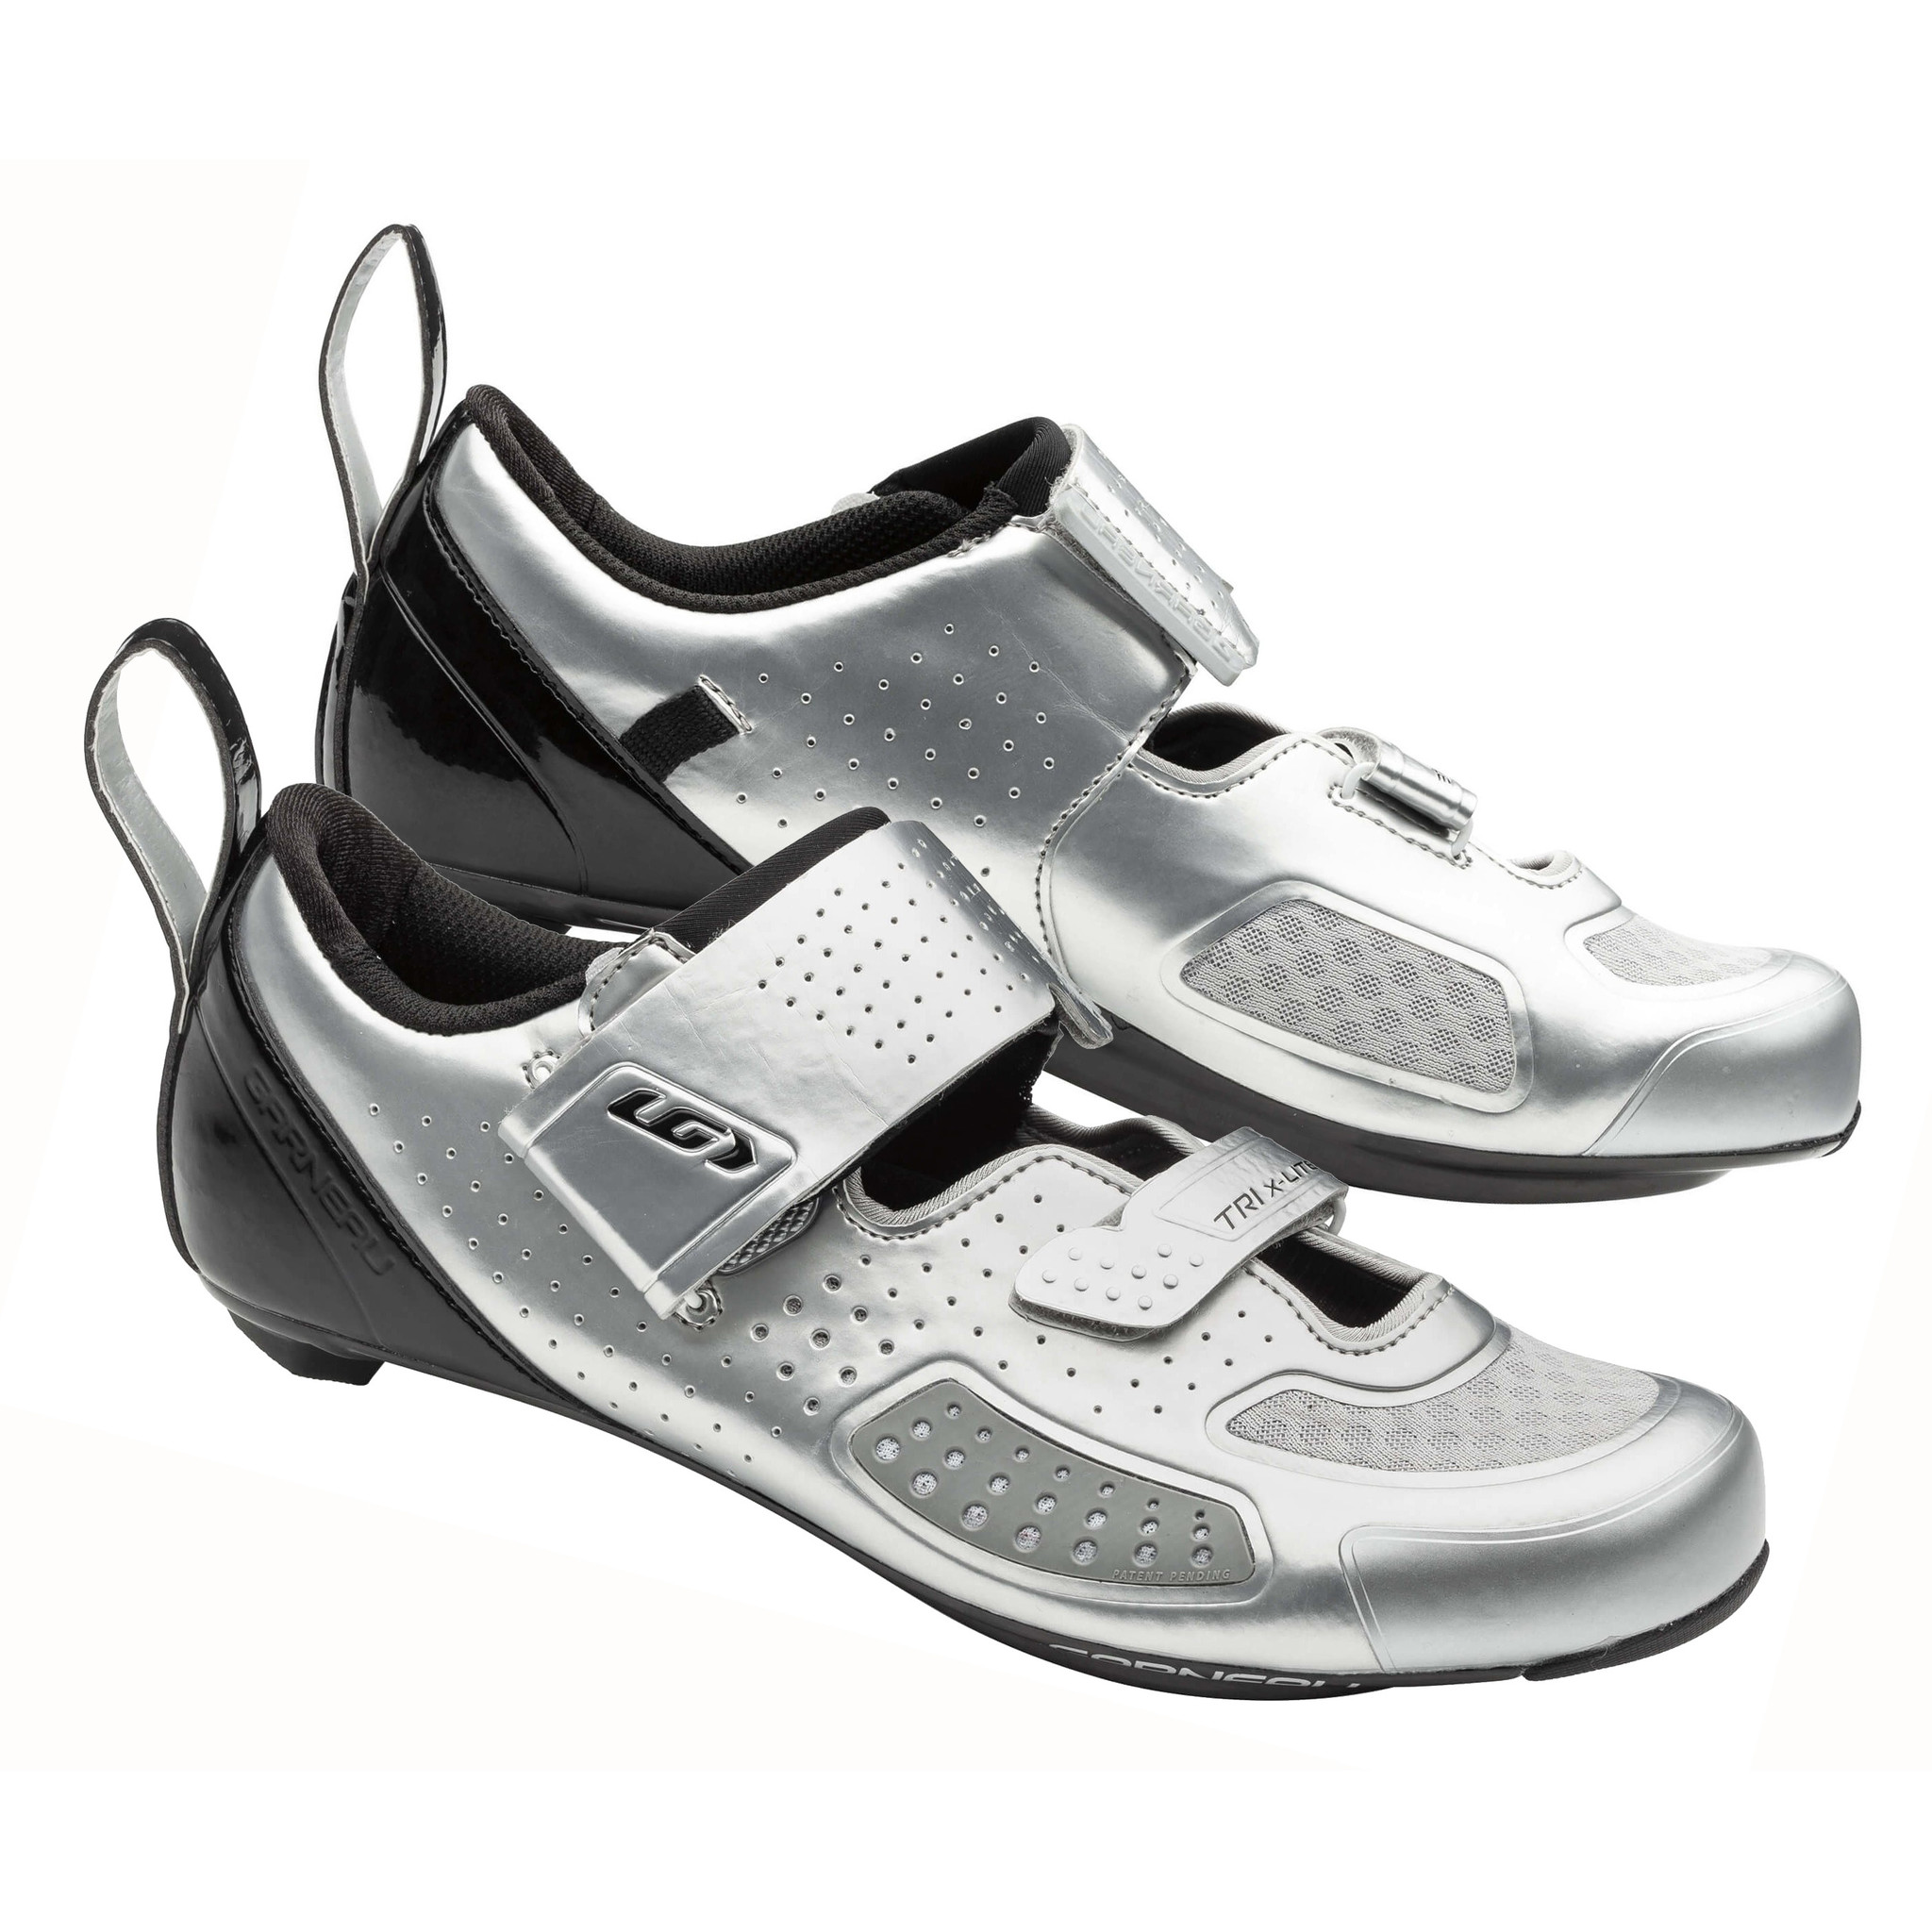 Garneau Men's Tri X-Speed IV Shoes